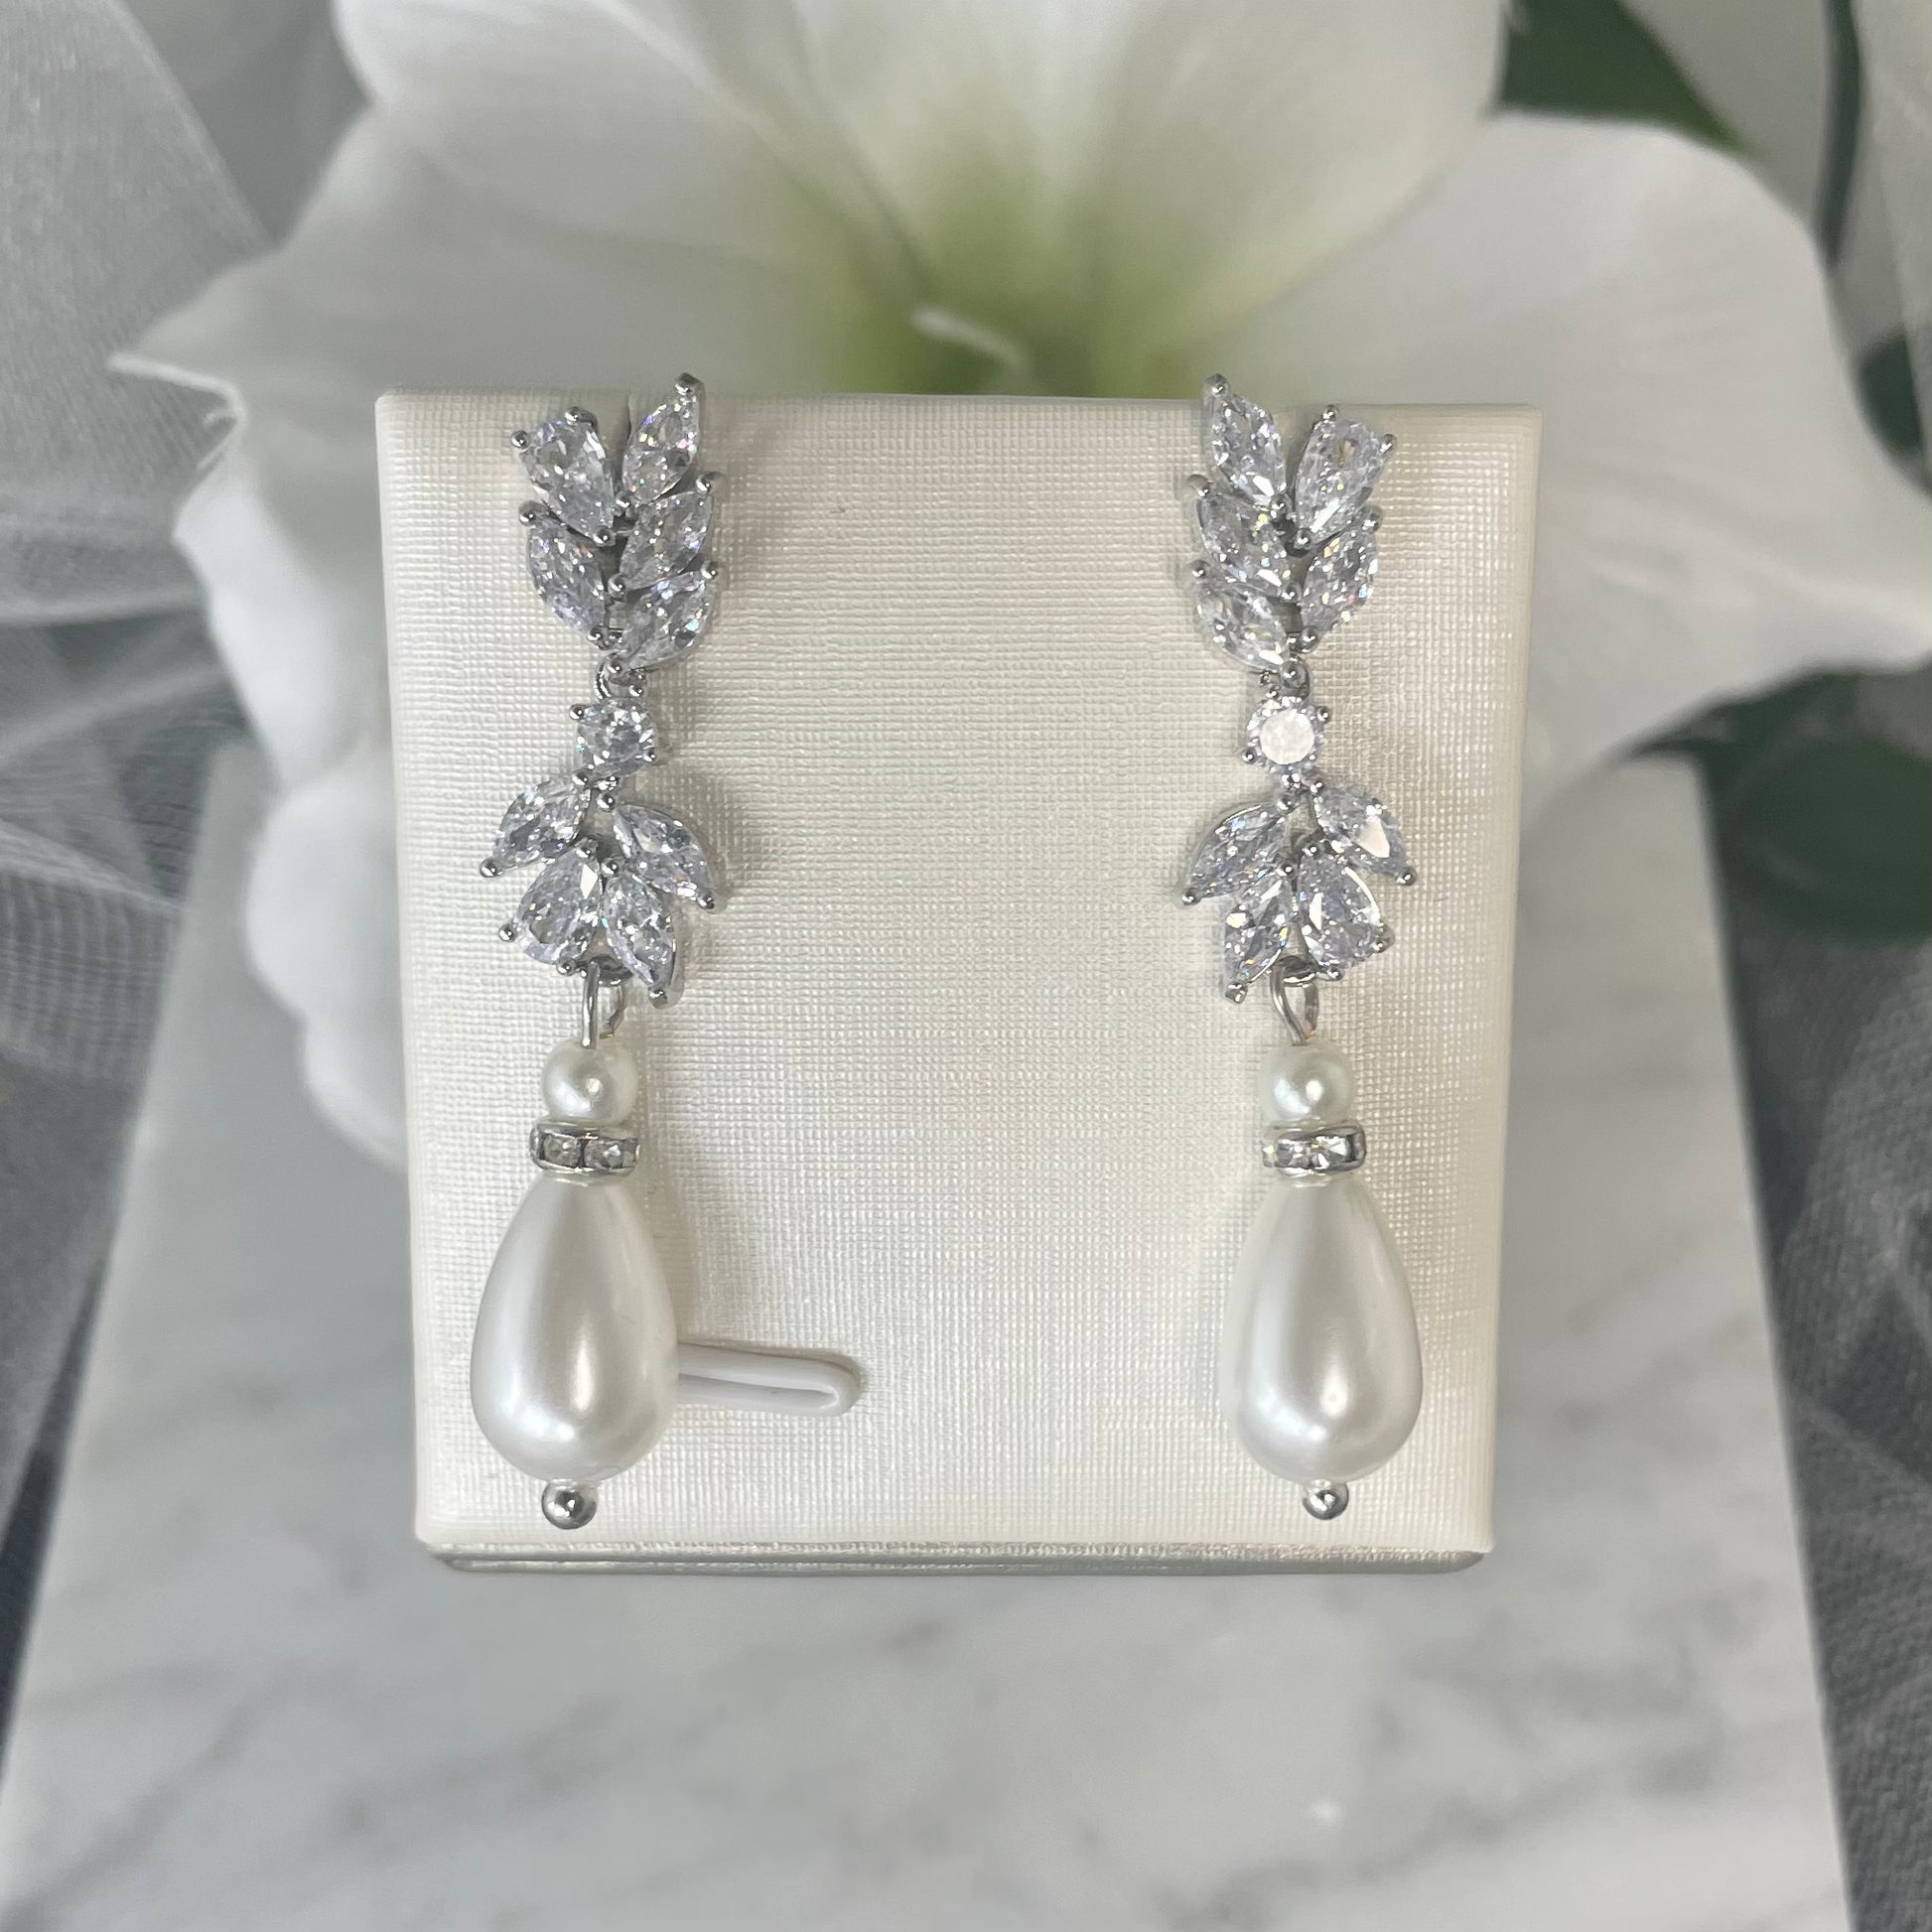 Nakira leaf-design pearl earrings with diamanté cubic zirconia detailing.